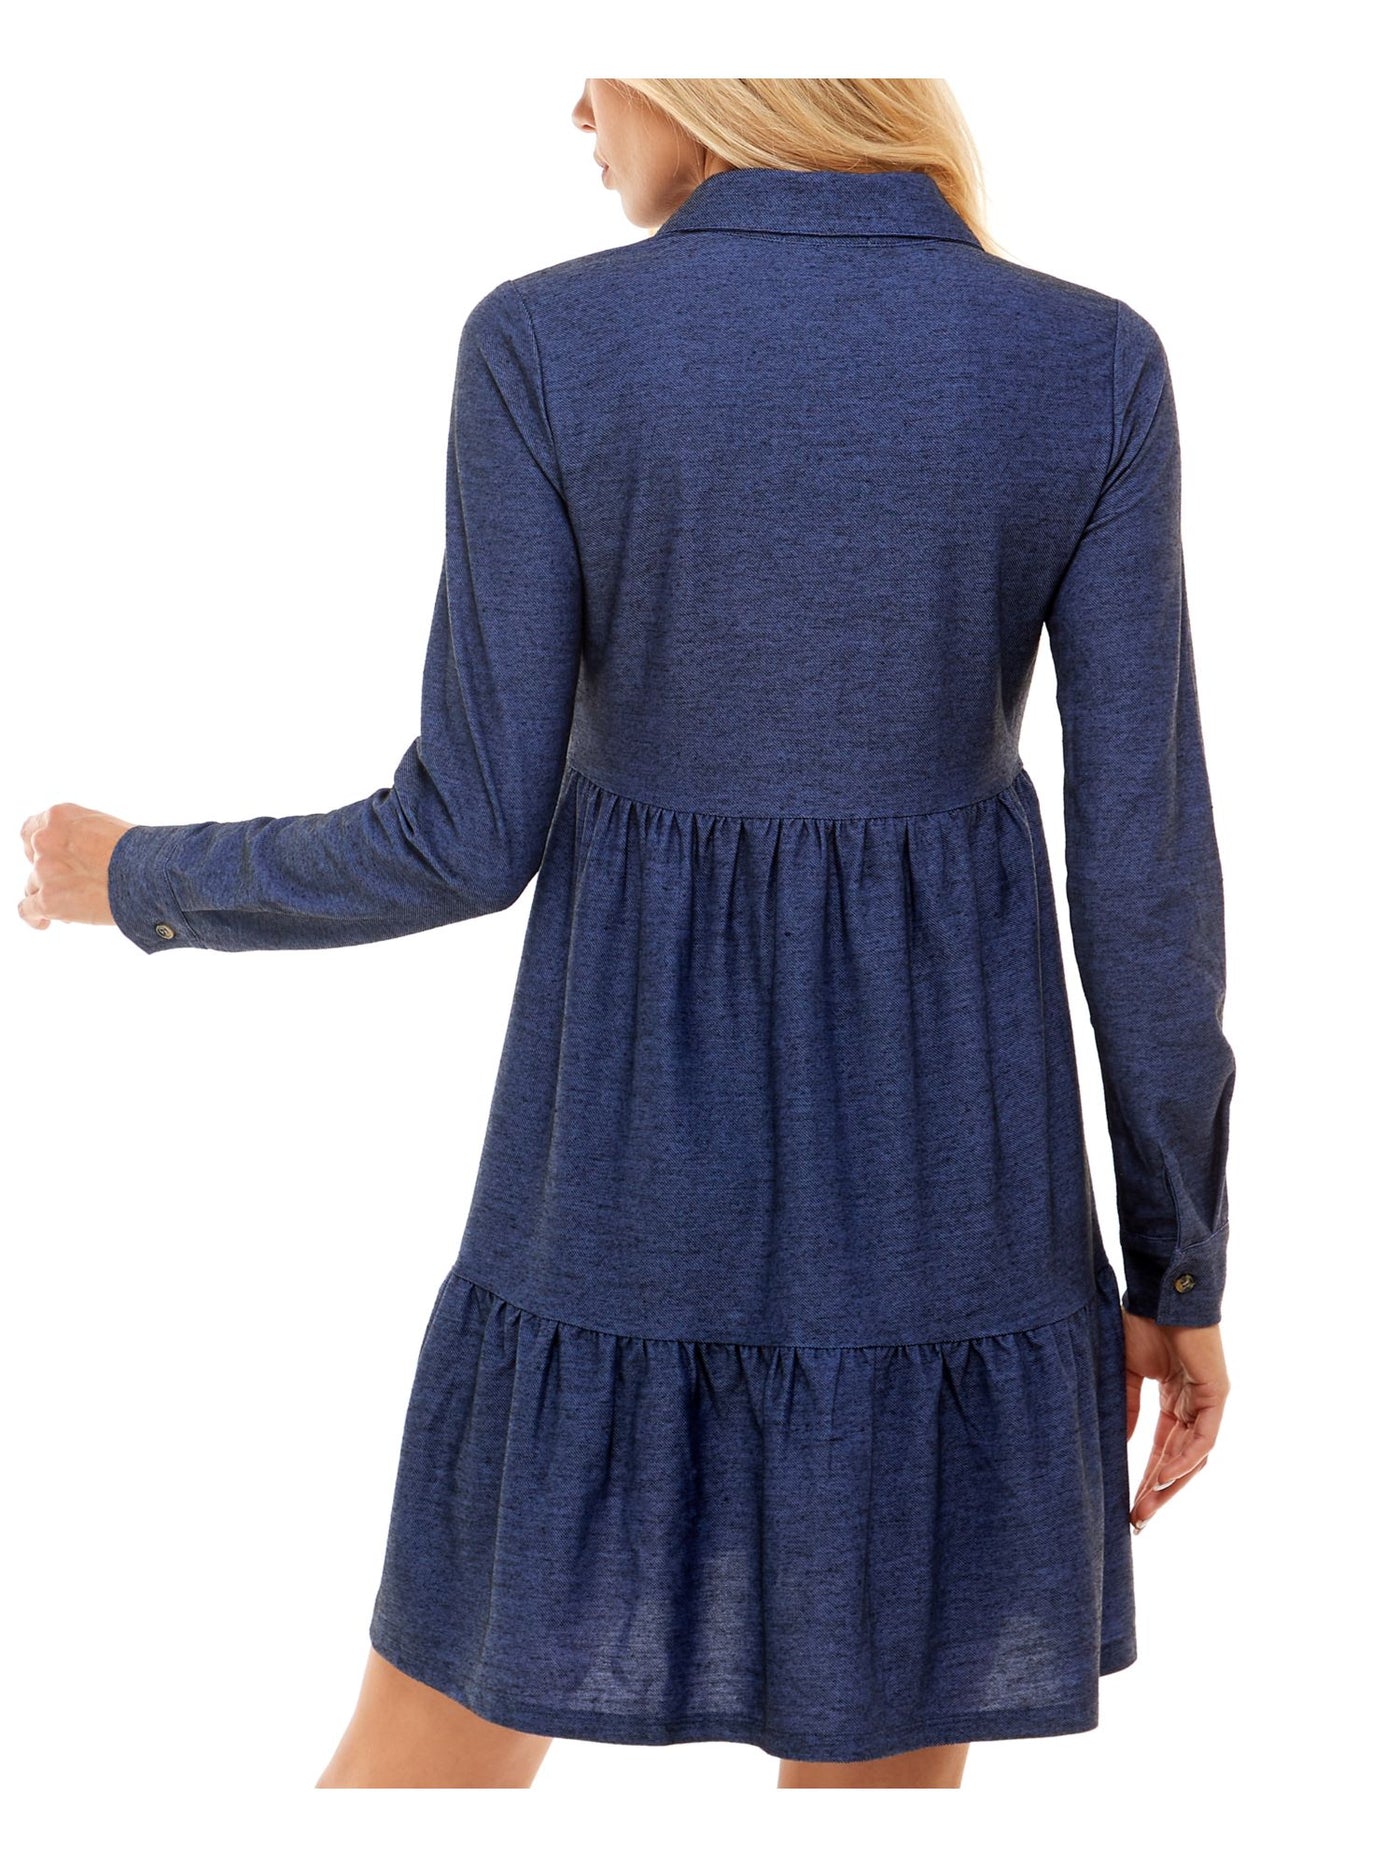 ULTRA FLIRT Womens Blue Stretch Pleated Ruffled Fitted Button Closures Cuffed Sleeve Point Collar Short Shirt Dress Juniors S